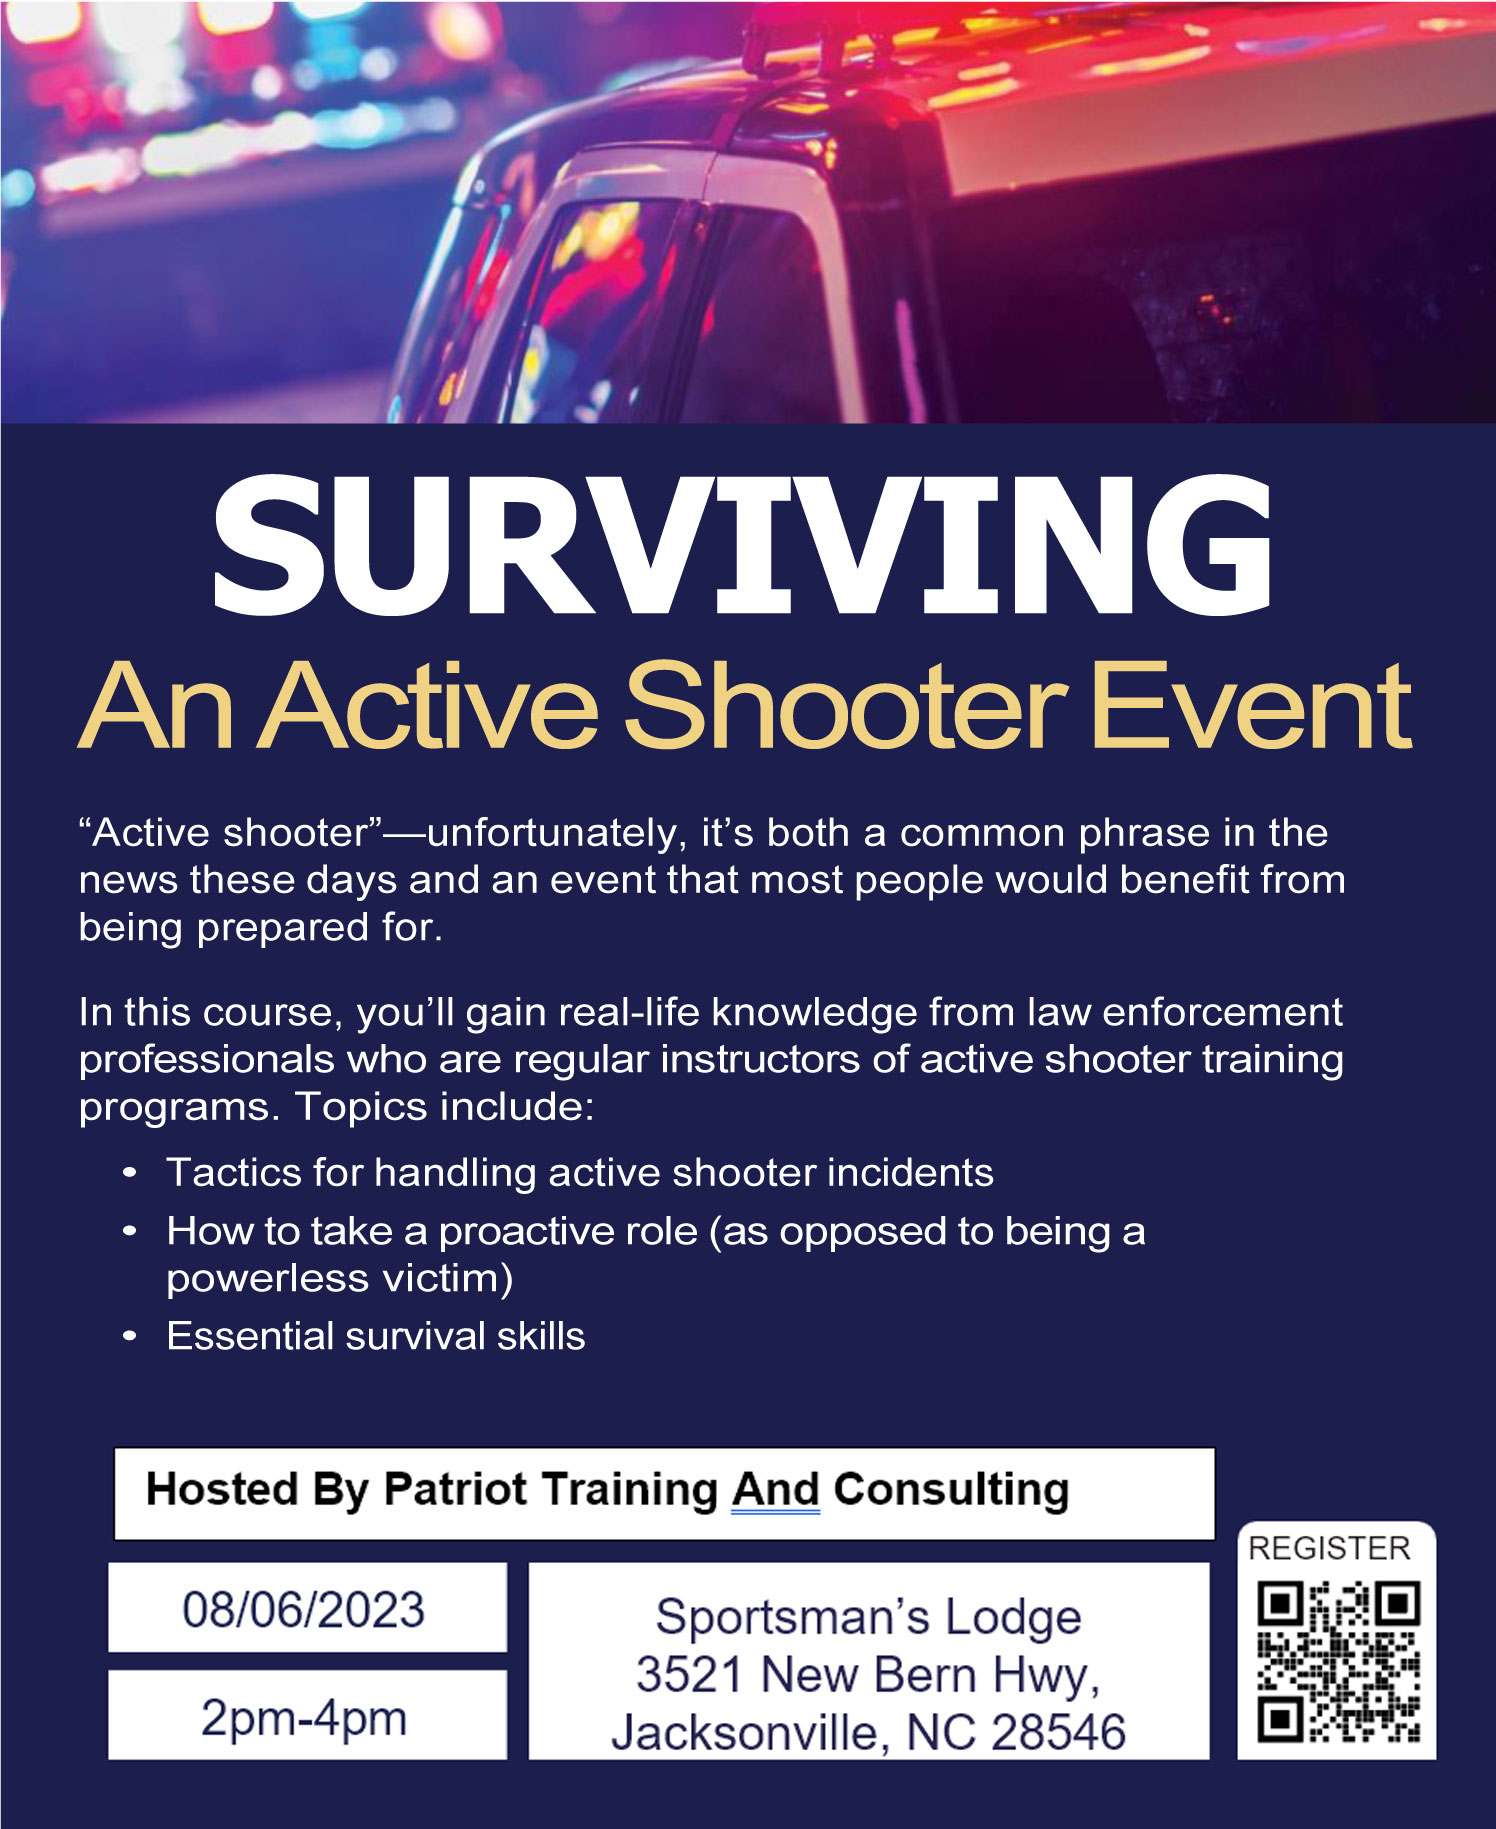 Surviving An Active Shooter Event